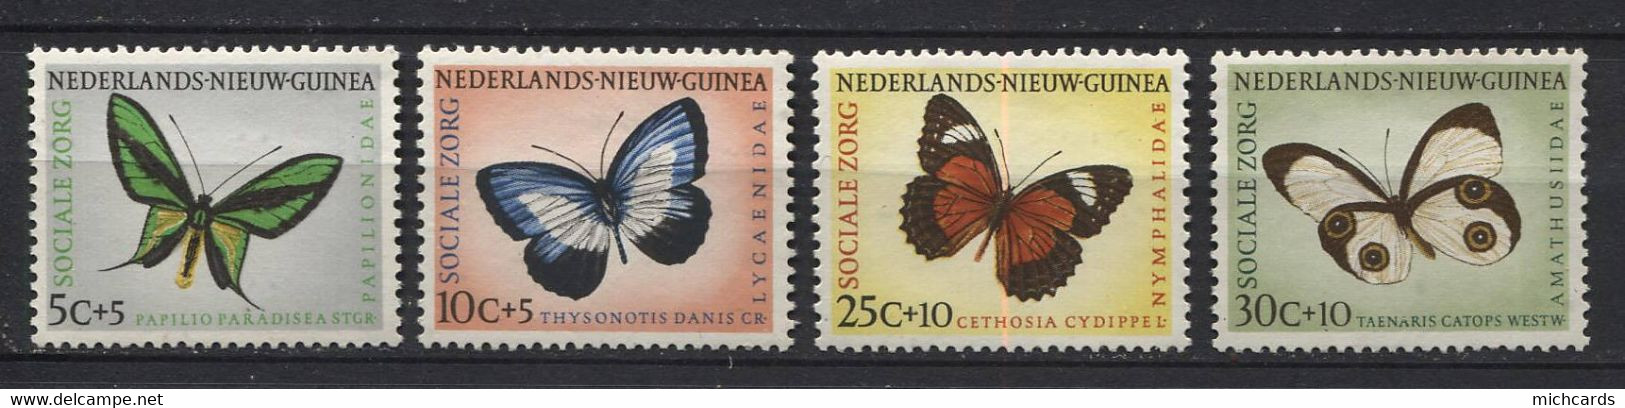 180 NOUVELLE GUINEE NEERLANDAISE 1960 - Y&T 58/61 - Papillon - Oiseau - Neuf ** (MNH) Sans Charniere - Niederländisch-Neuguinea